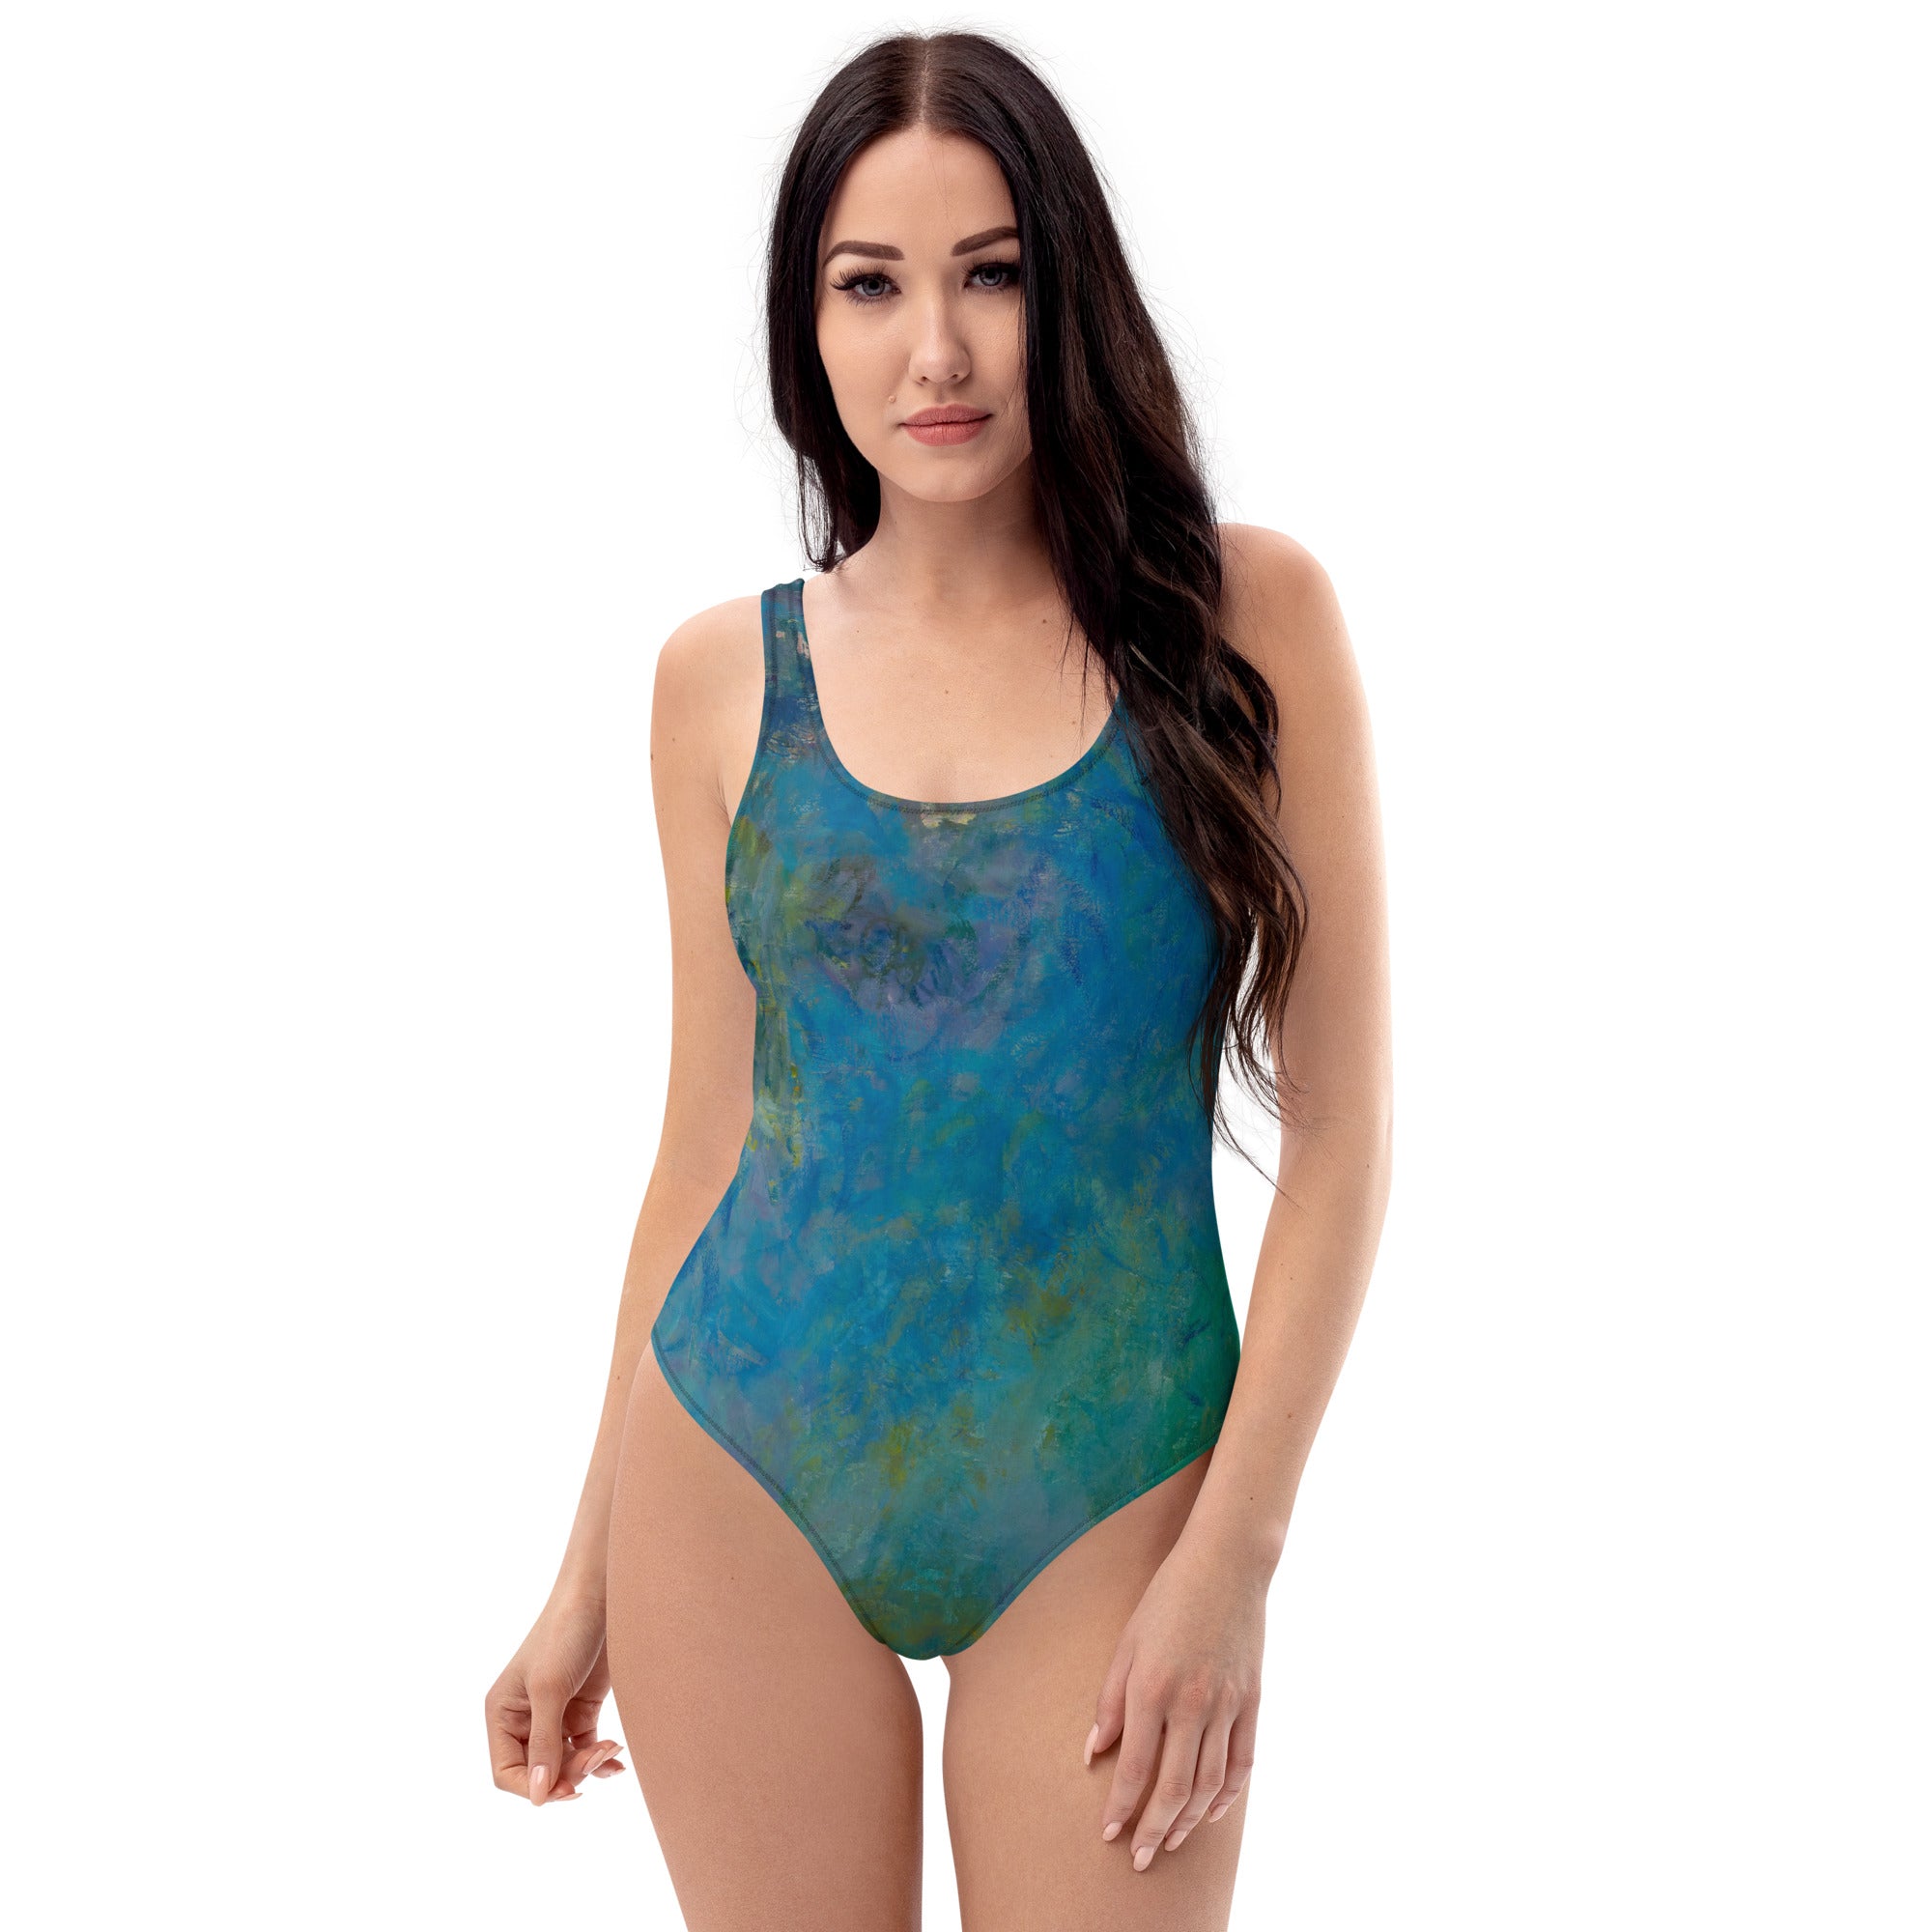 Claude Monet 'Wisteria' Famous Painting Swimsuit | Premium Art One Piece Swimsuit